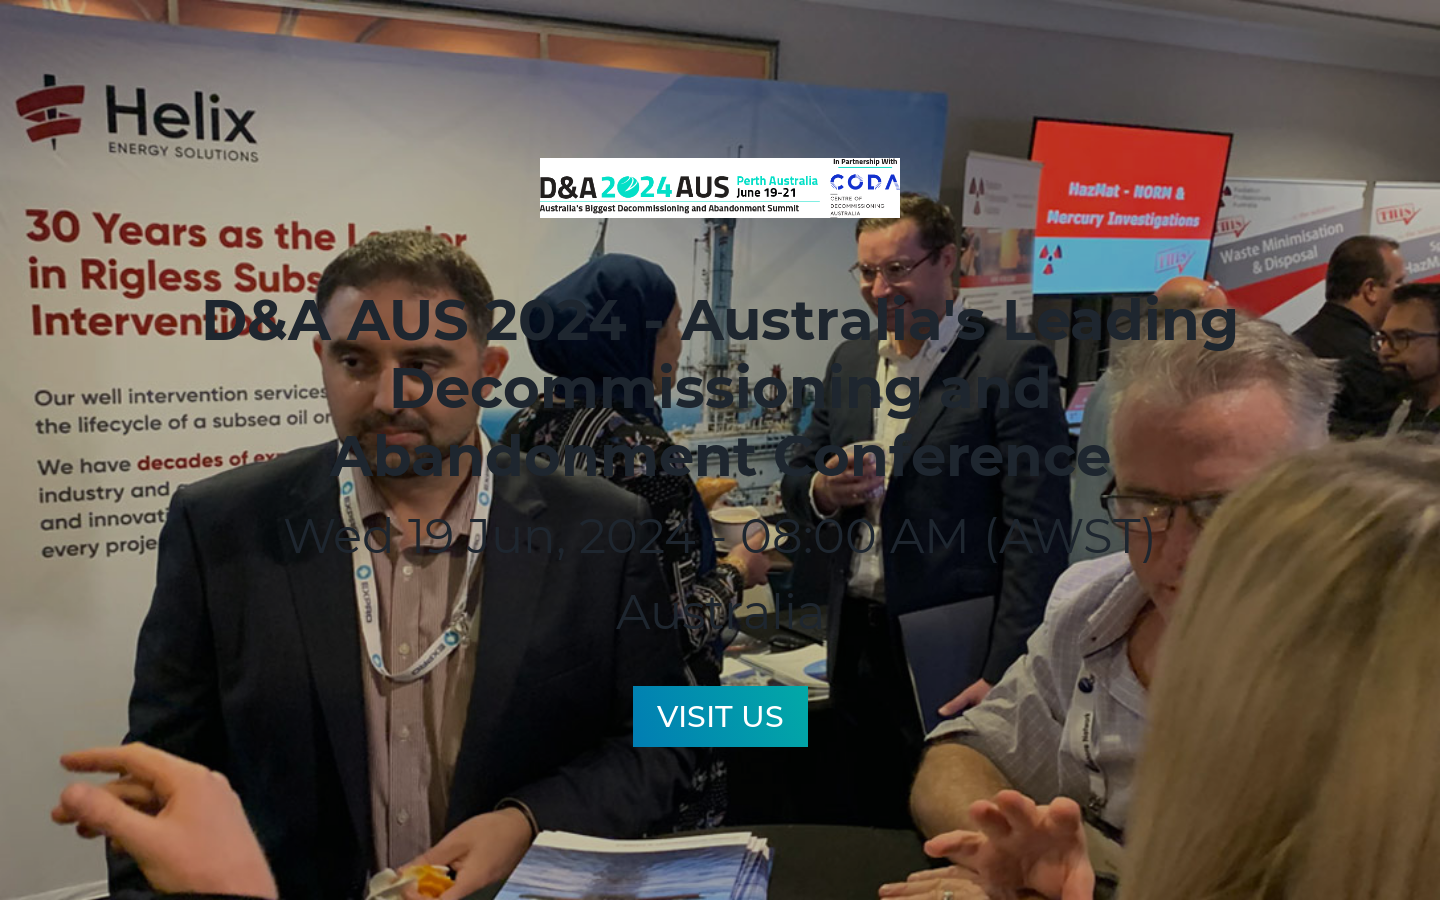 D&A AUS 2024 Australia’s Biggest and Abandonment Summit